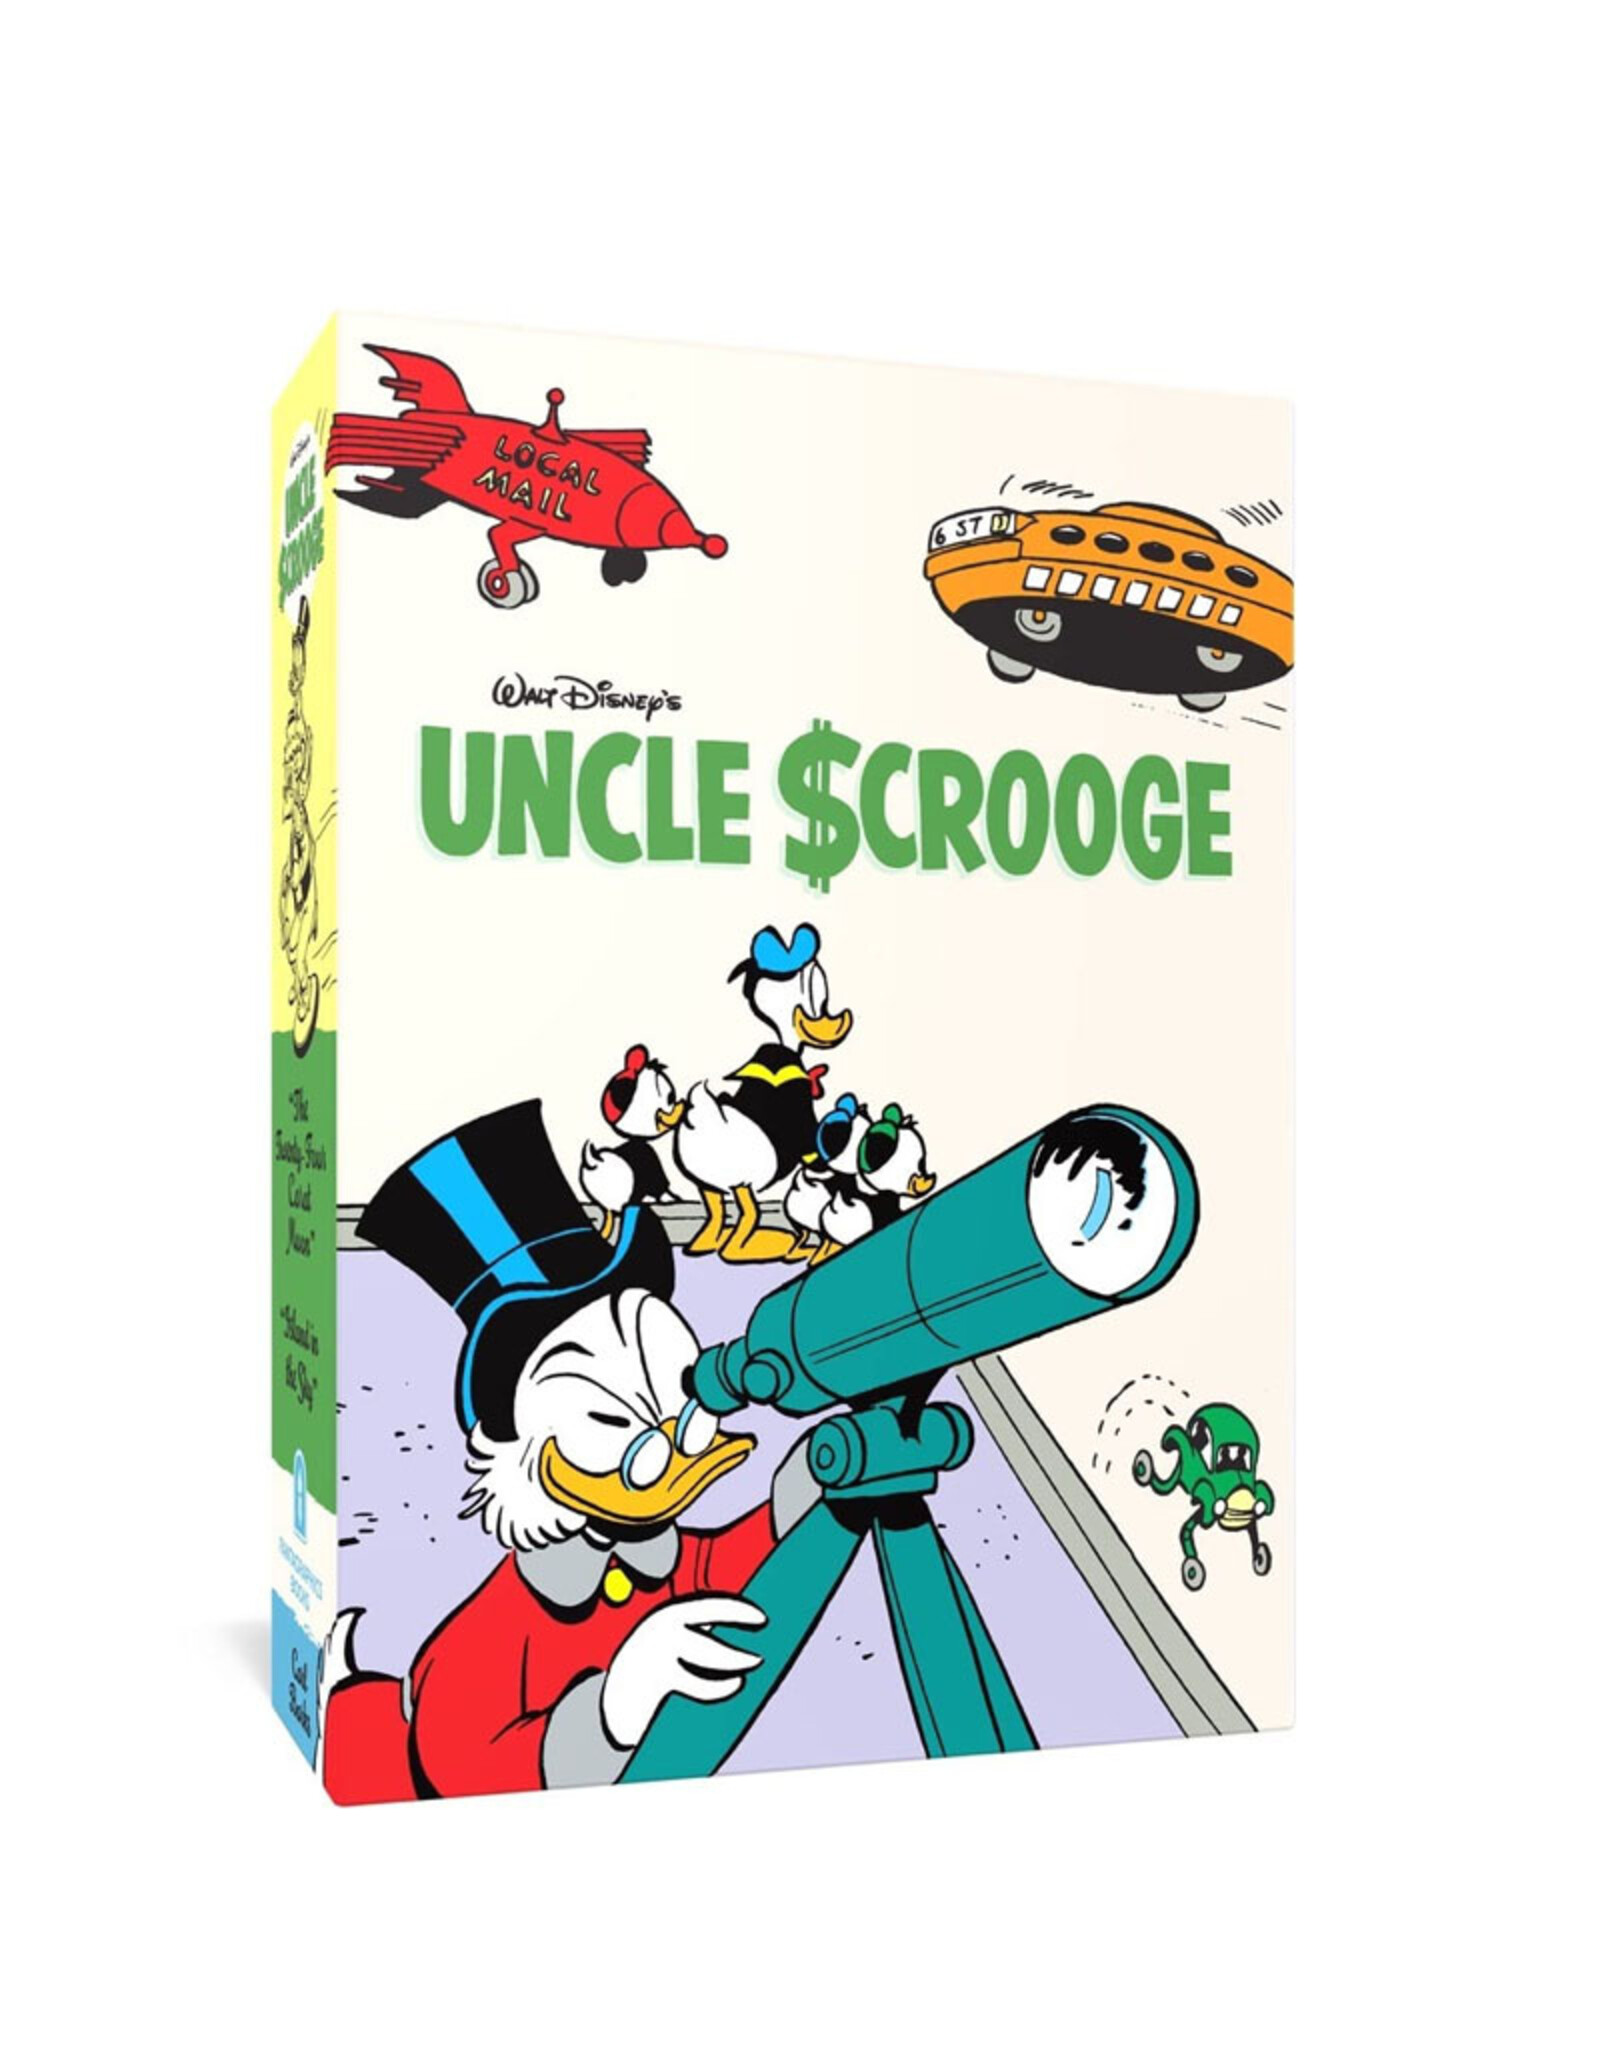 Fantagraphics Books Walt Disney's Uncle Scrooge Gift Box Set